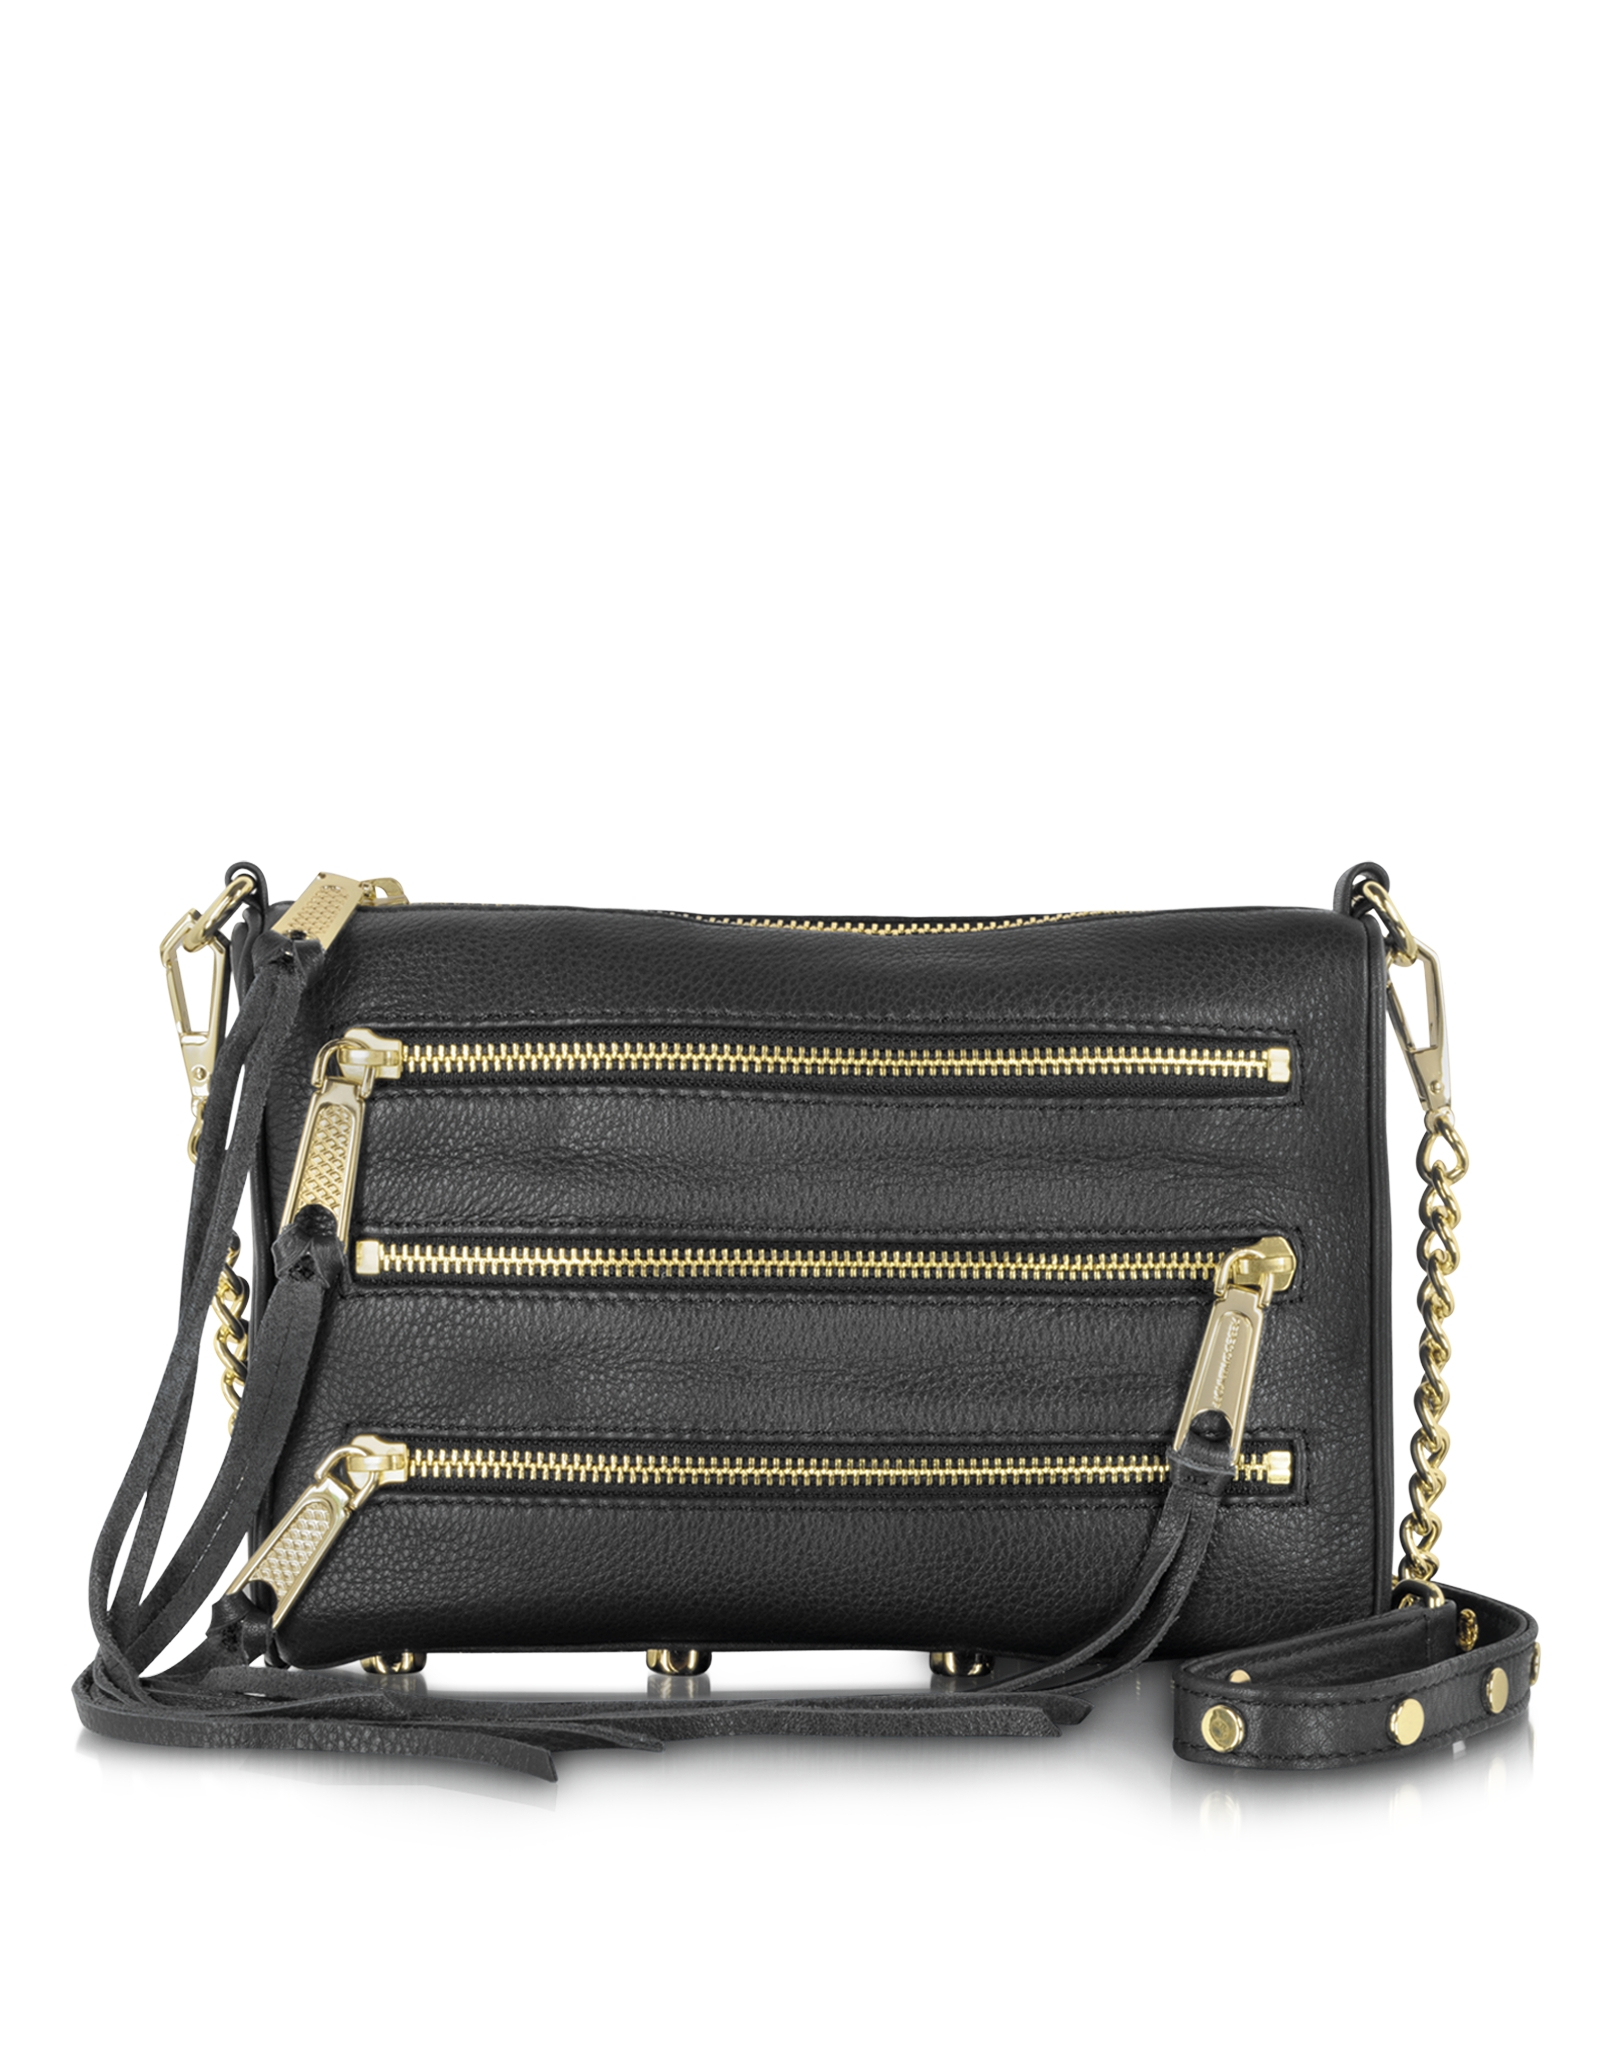 Rebecca minkoff Black Leather Mini 5 Zip Crossbody Bag in Black | Lyst